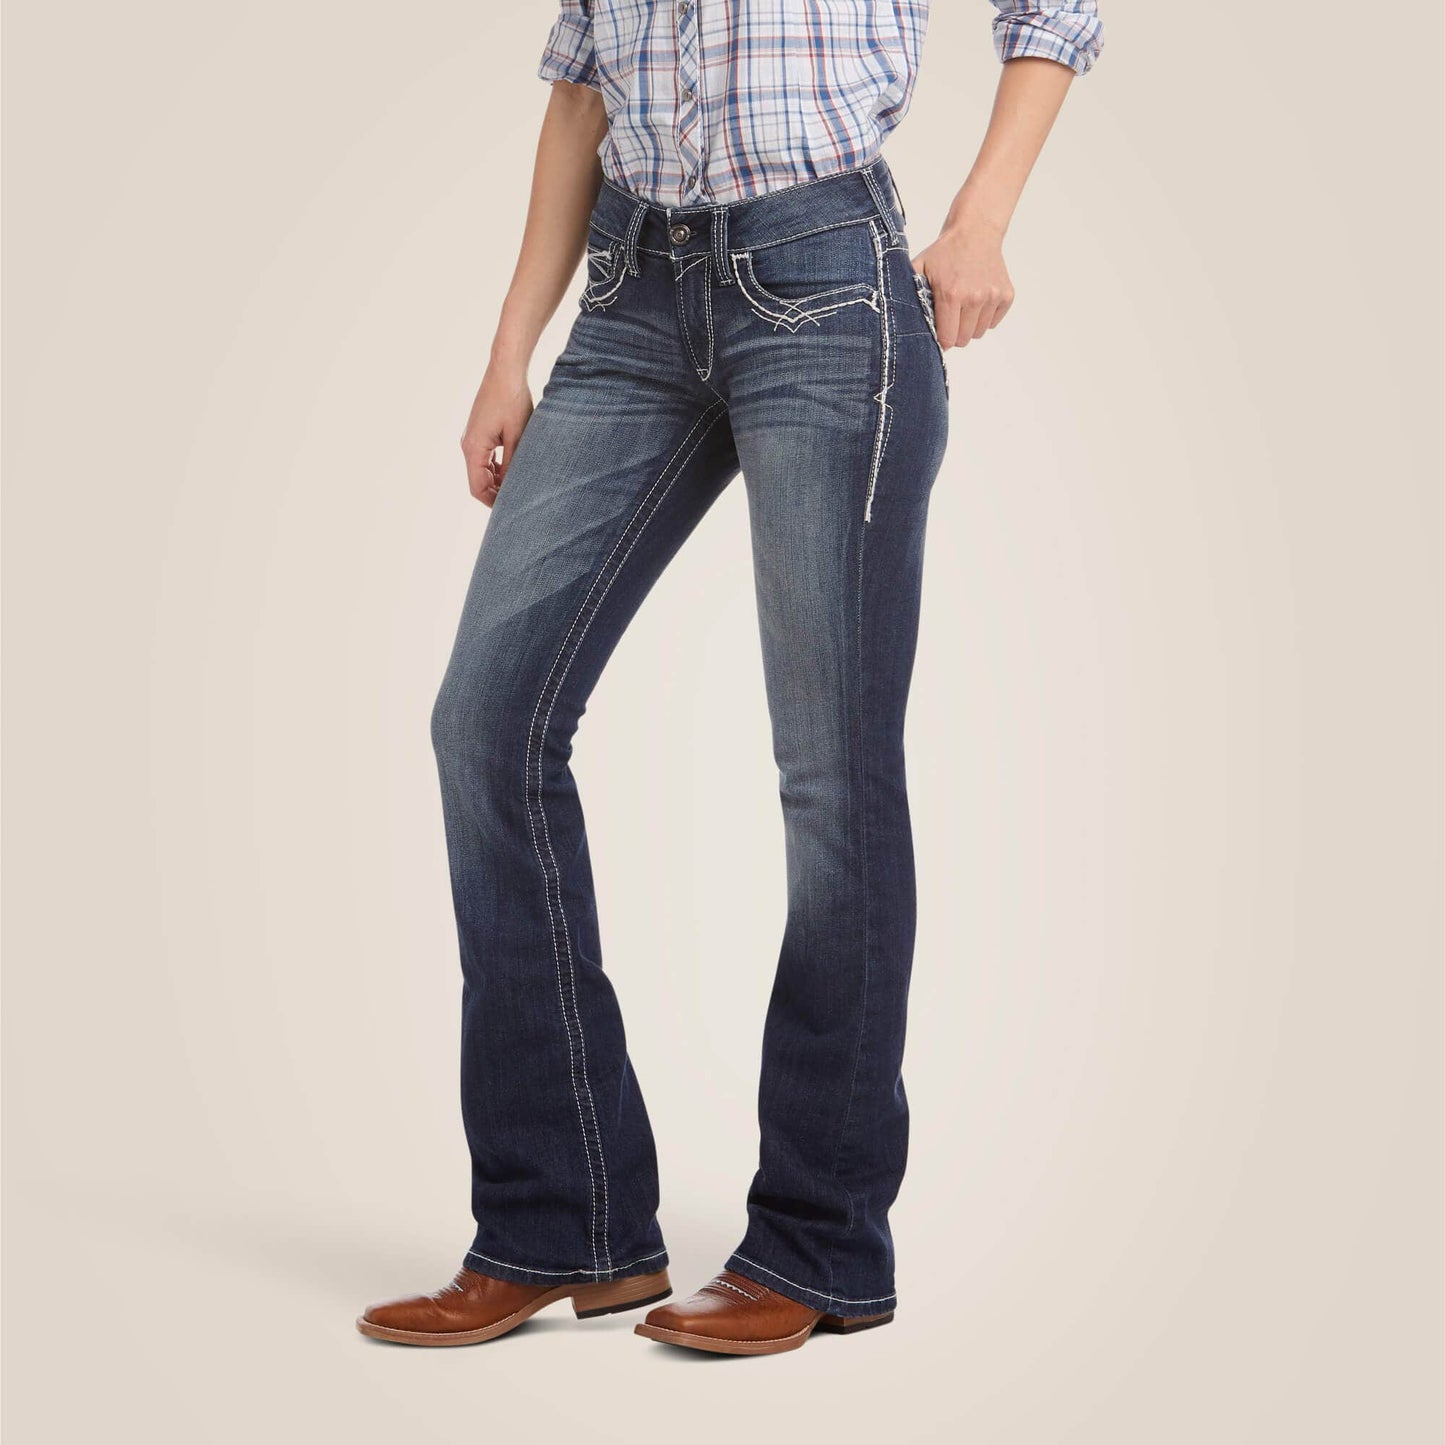 ThriftedEquestrian Clothing 29XL Ariat Real Denim Jeans - 29XL